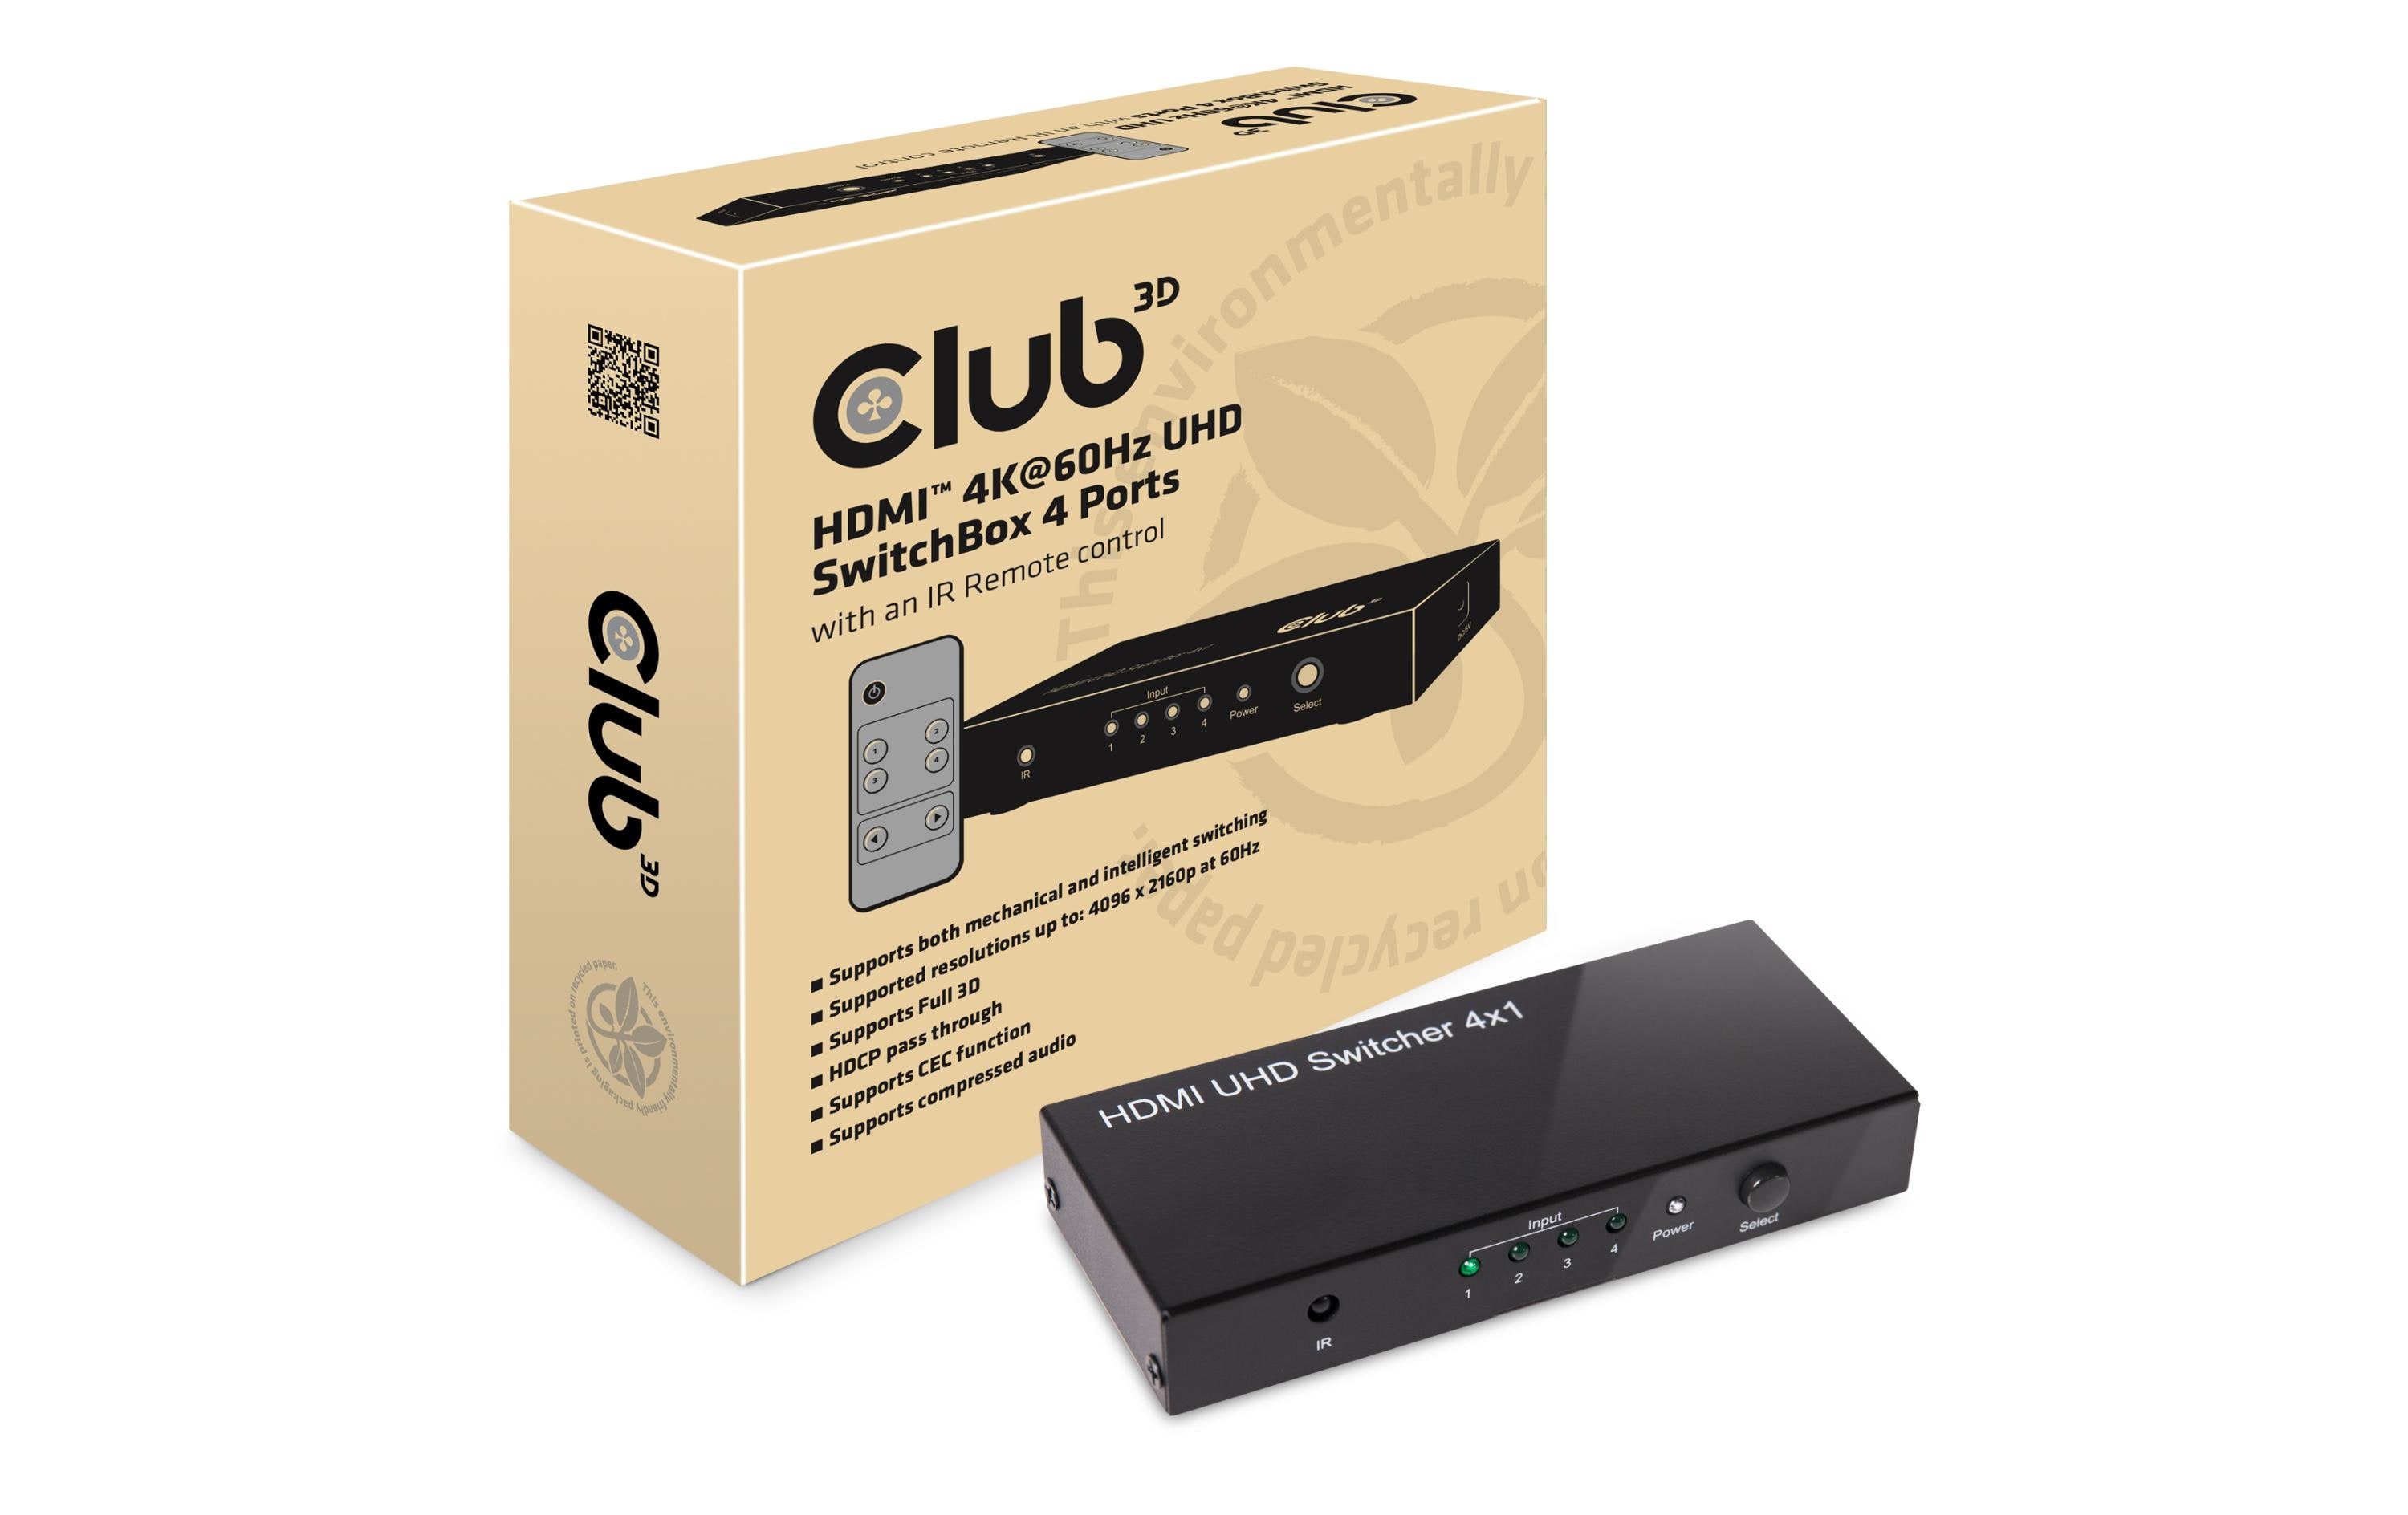 Club 3D Switchbox HDMI 2.0 UHD, 4 Port